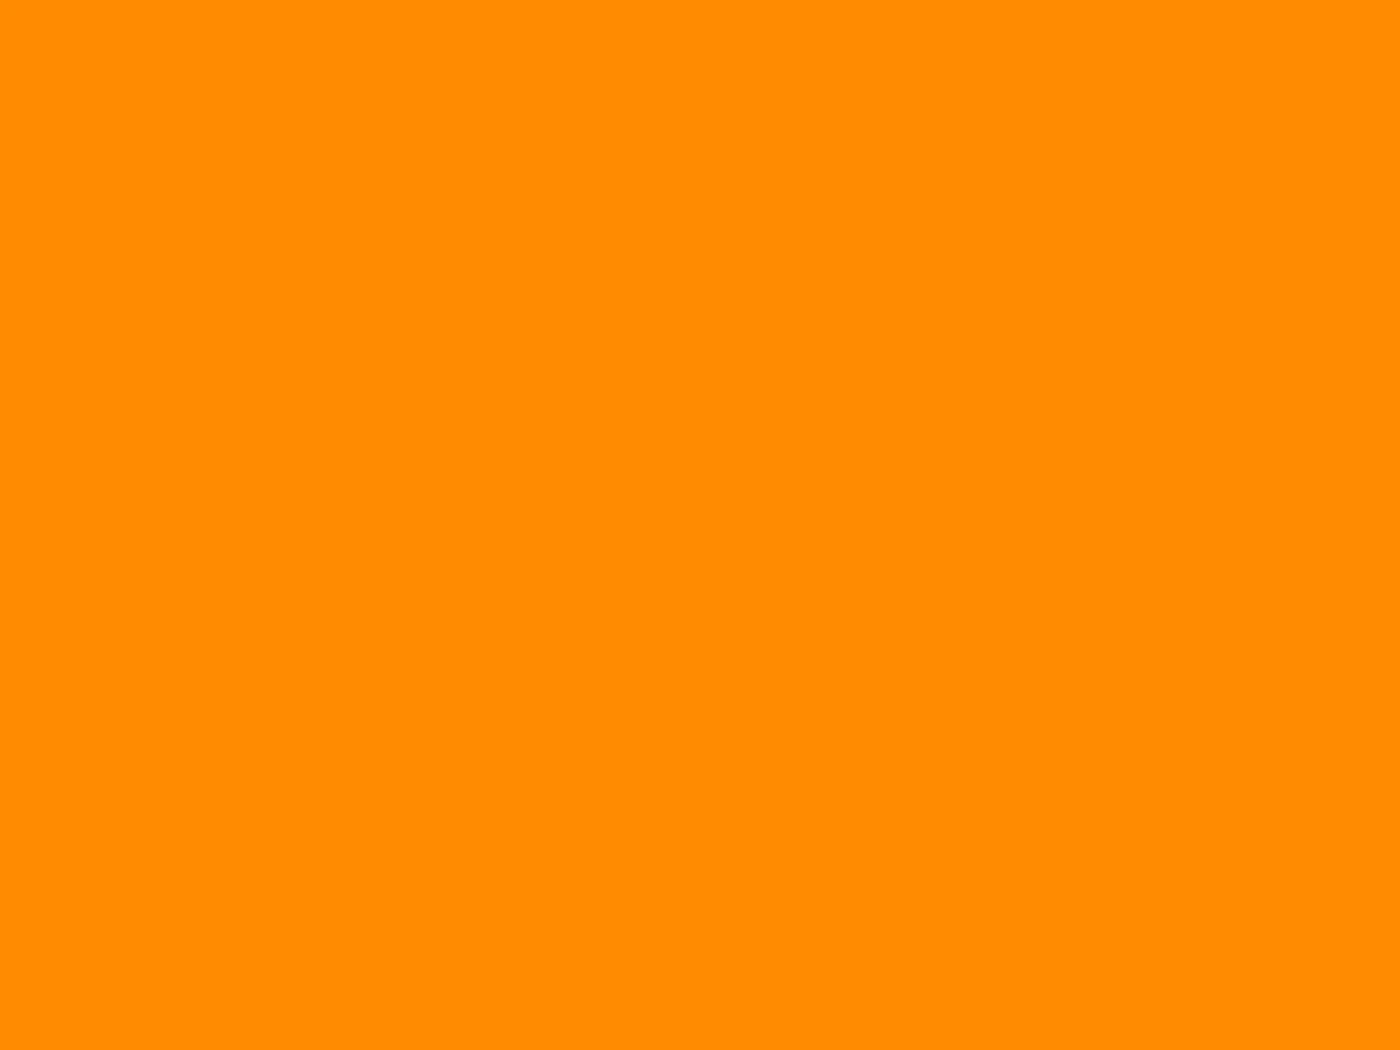 Wallpaper warna orange polos